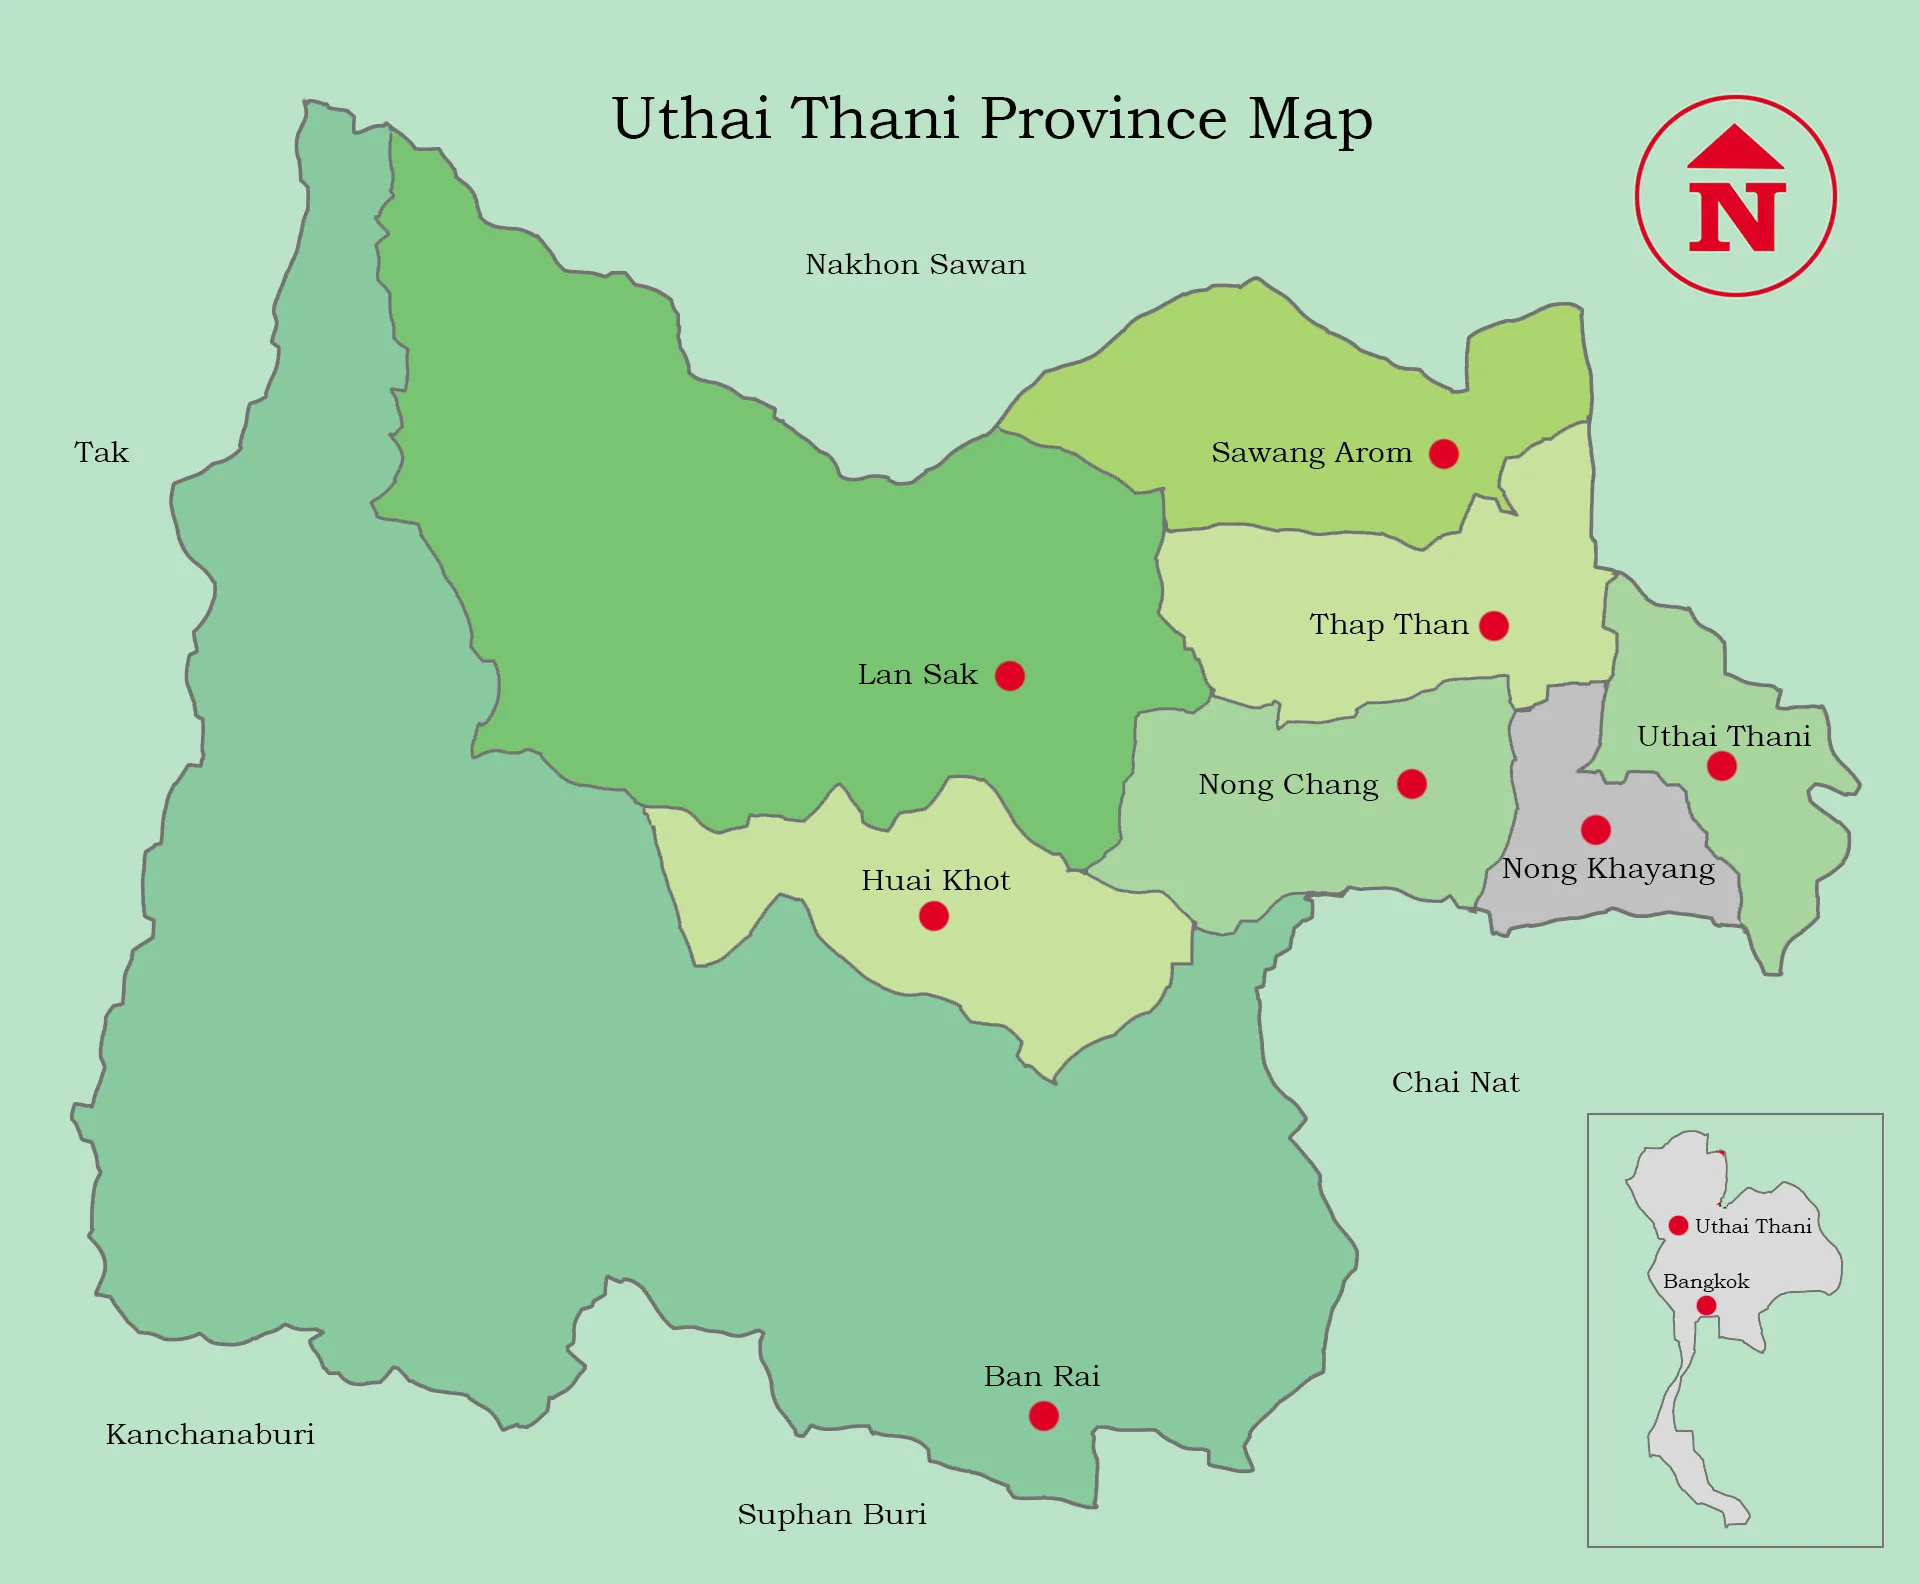 Uthai Thani Province Map